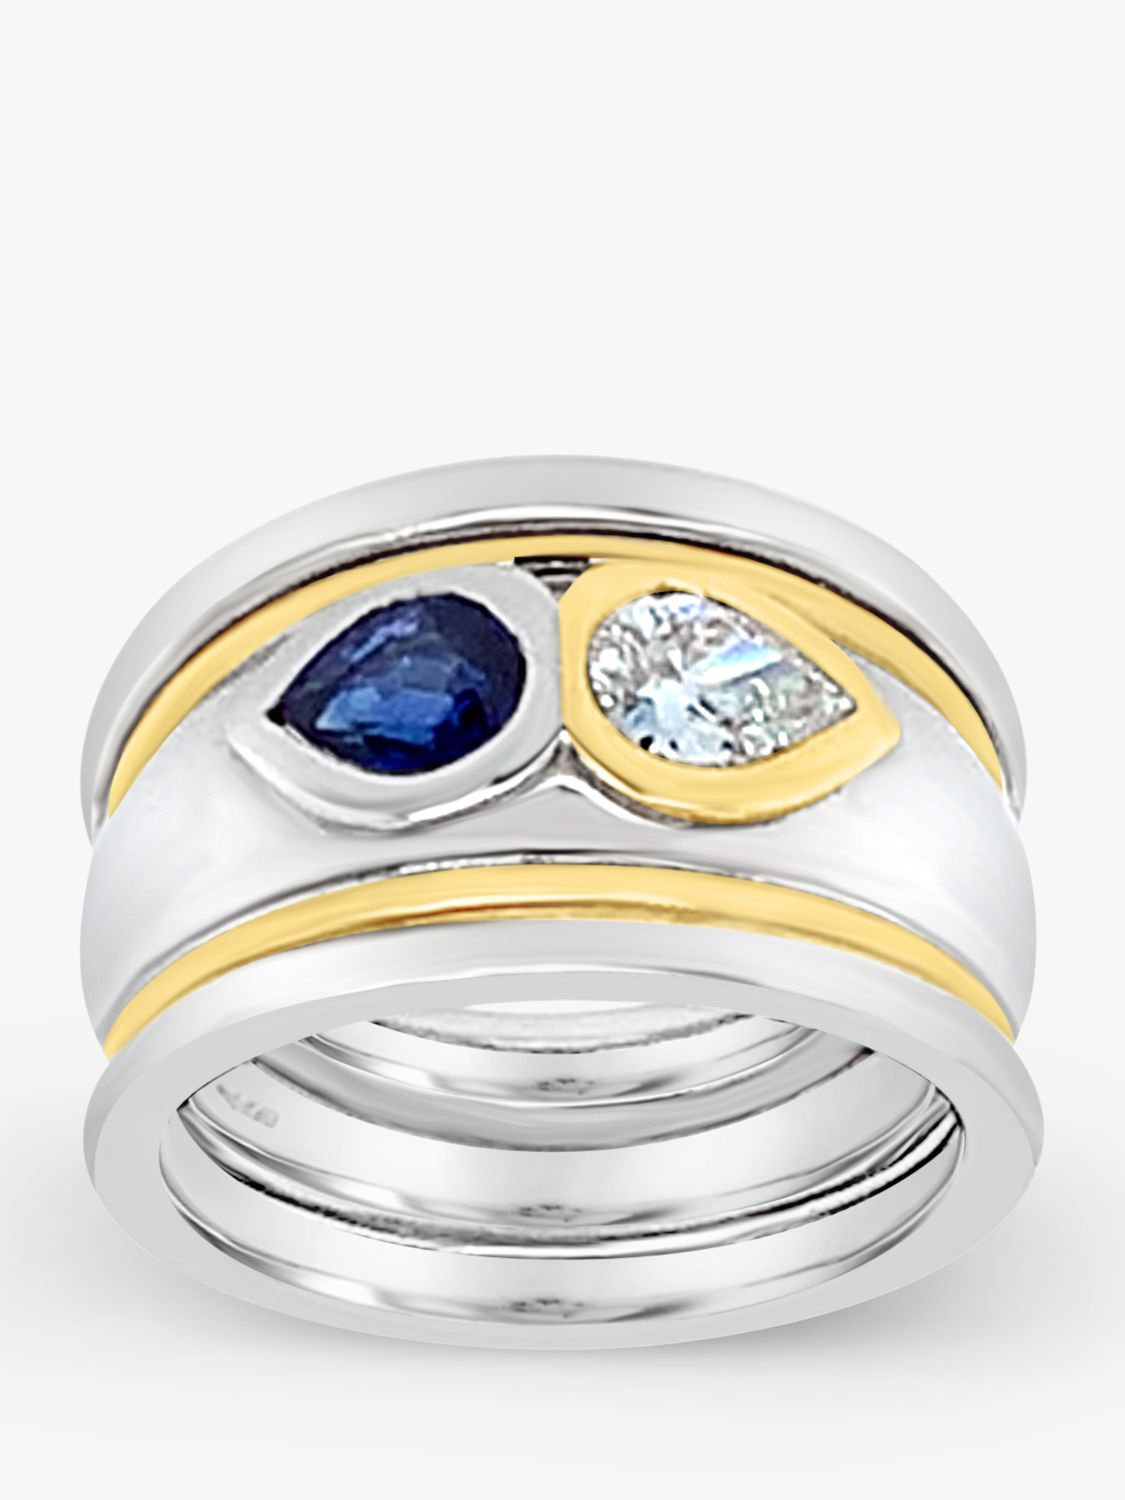 Milton & Humble Jewellery 18ct White Gold Second Hand Sapphire & Diamond Ring, Dated Circa 2000s